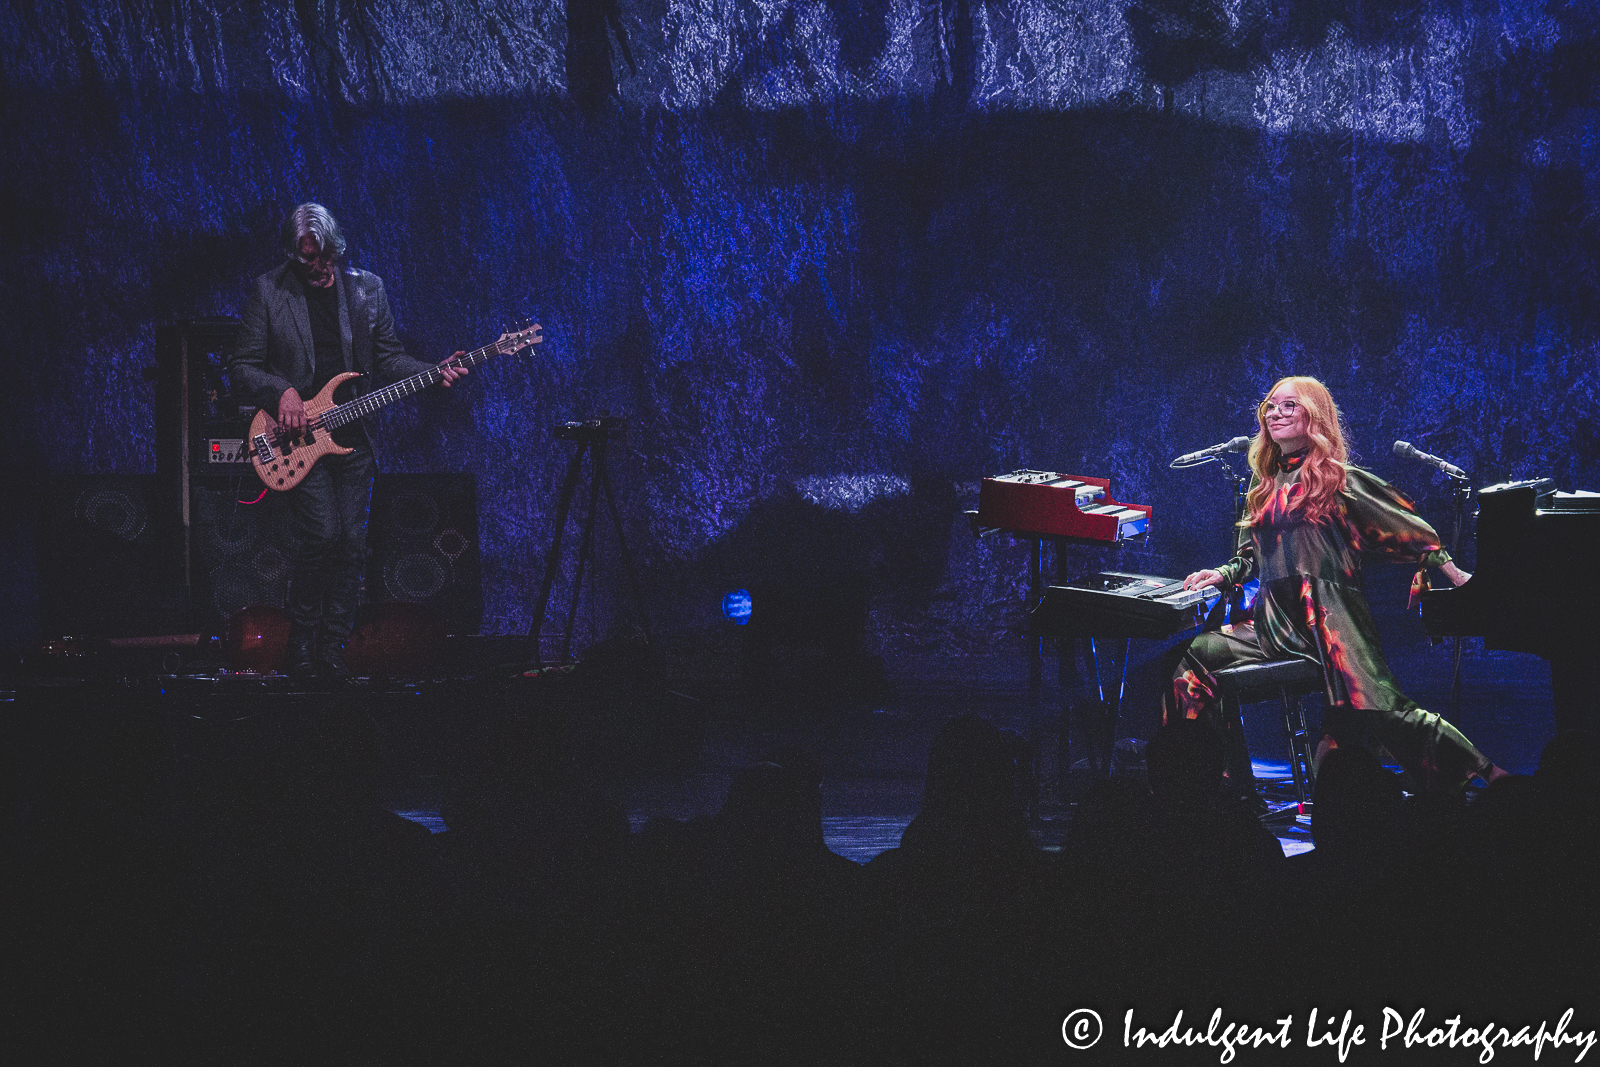 Pop rock artist Tori Amos live in concert with bass guitarist Jon Evans at Kansas City Music Hall on May 31, 2022.